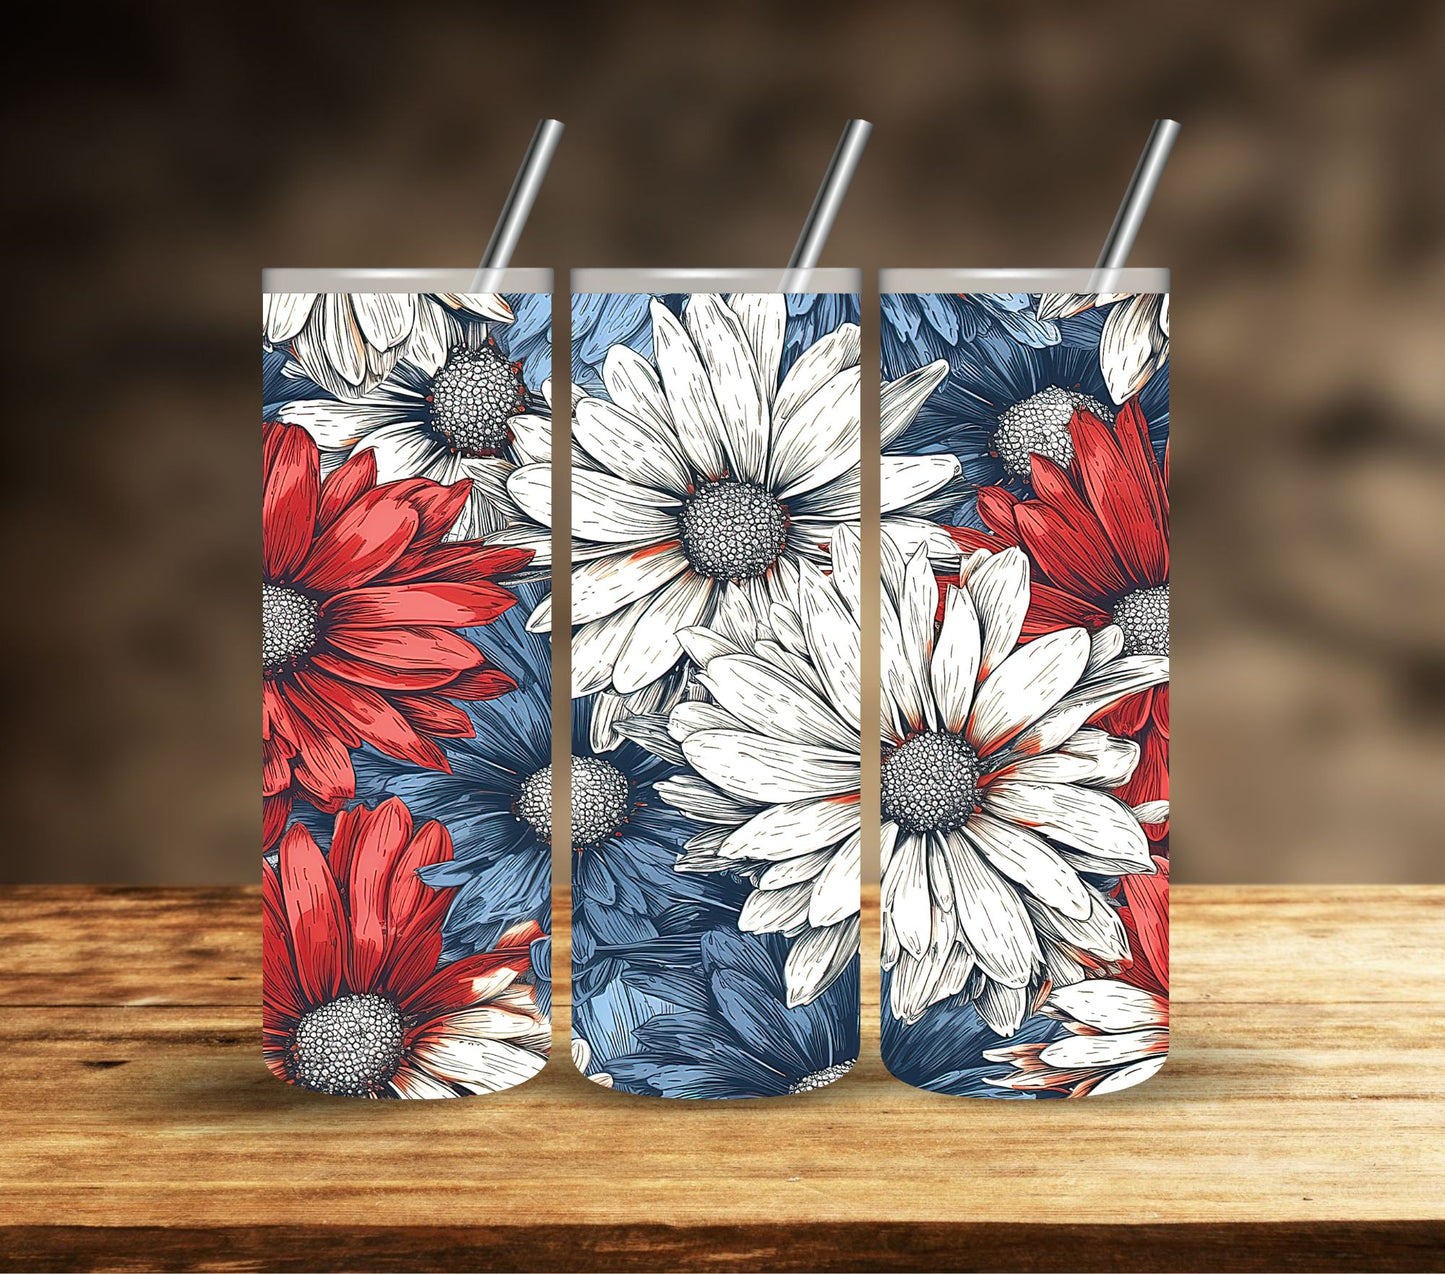 Patriotic Floral Vinyl Tumbler wraps- 11 designs